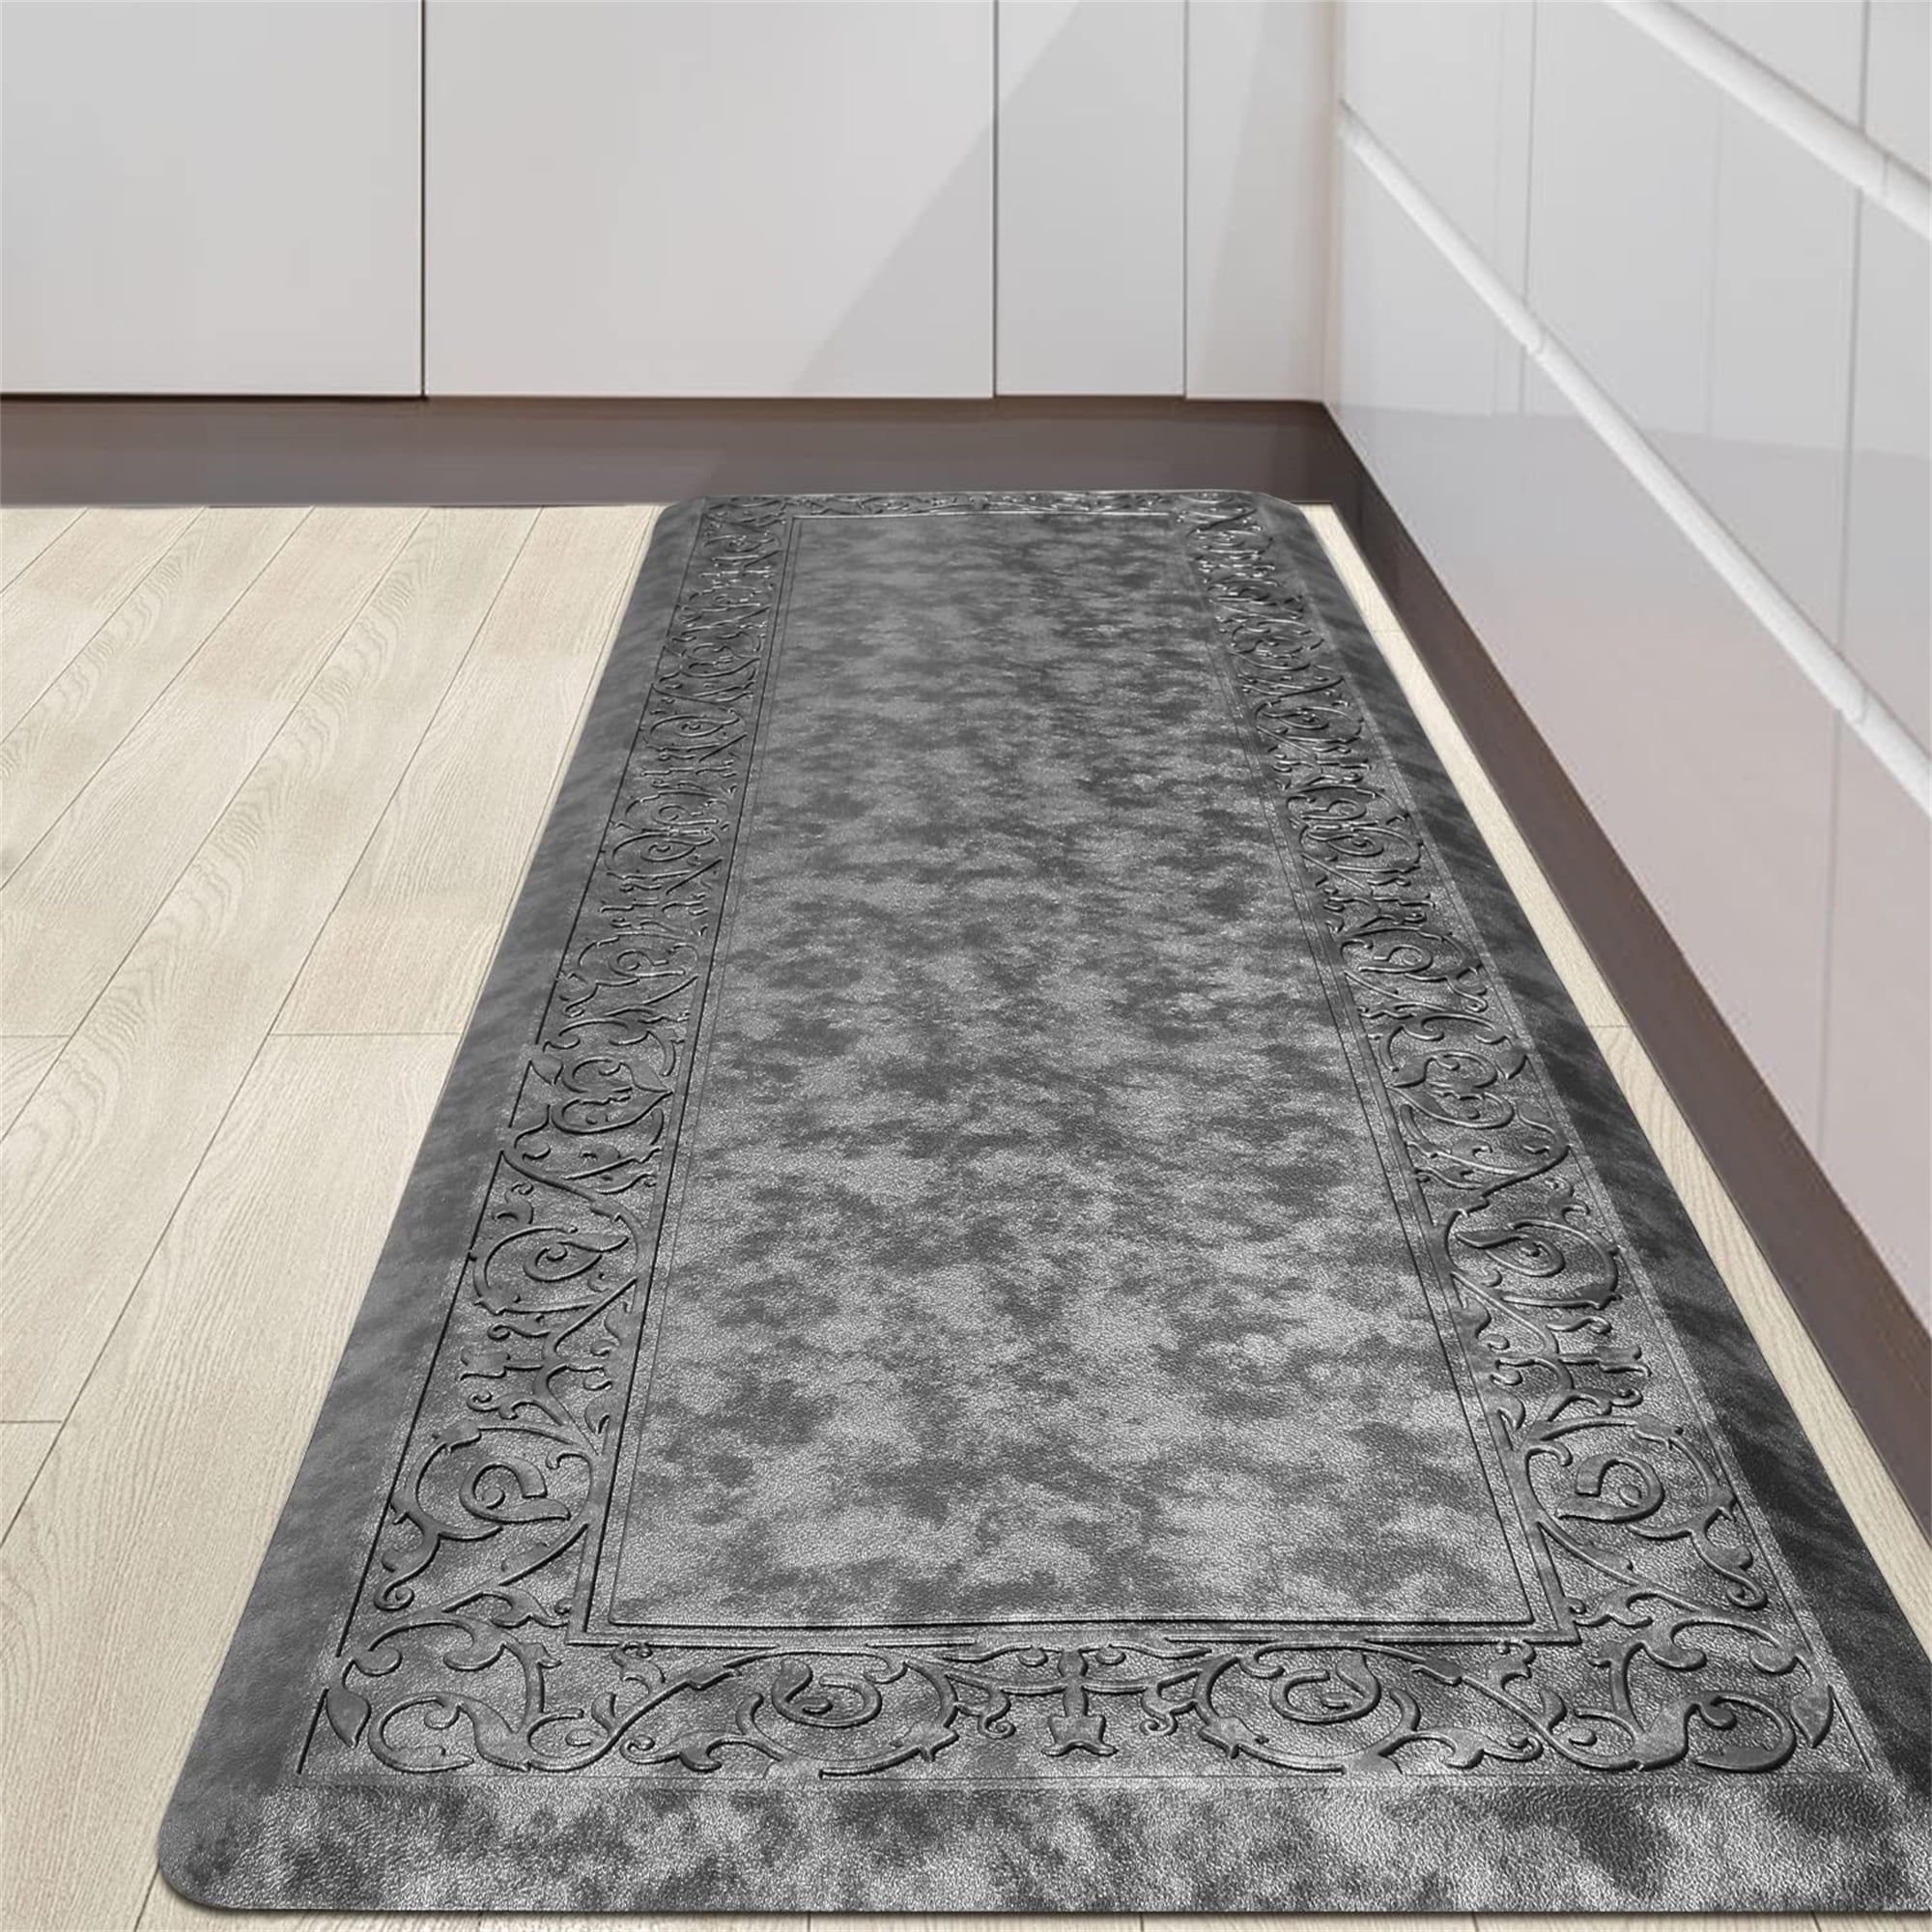 Anti Fatigue Floor Mats,Perfect Kitchen Mat, Standing Desk Mat ,Comfort at  Home, Office, Stain Resistant,Non-Slip Bottom,20''x39''x0.75